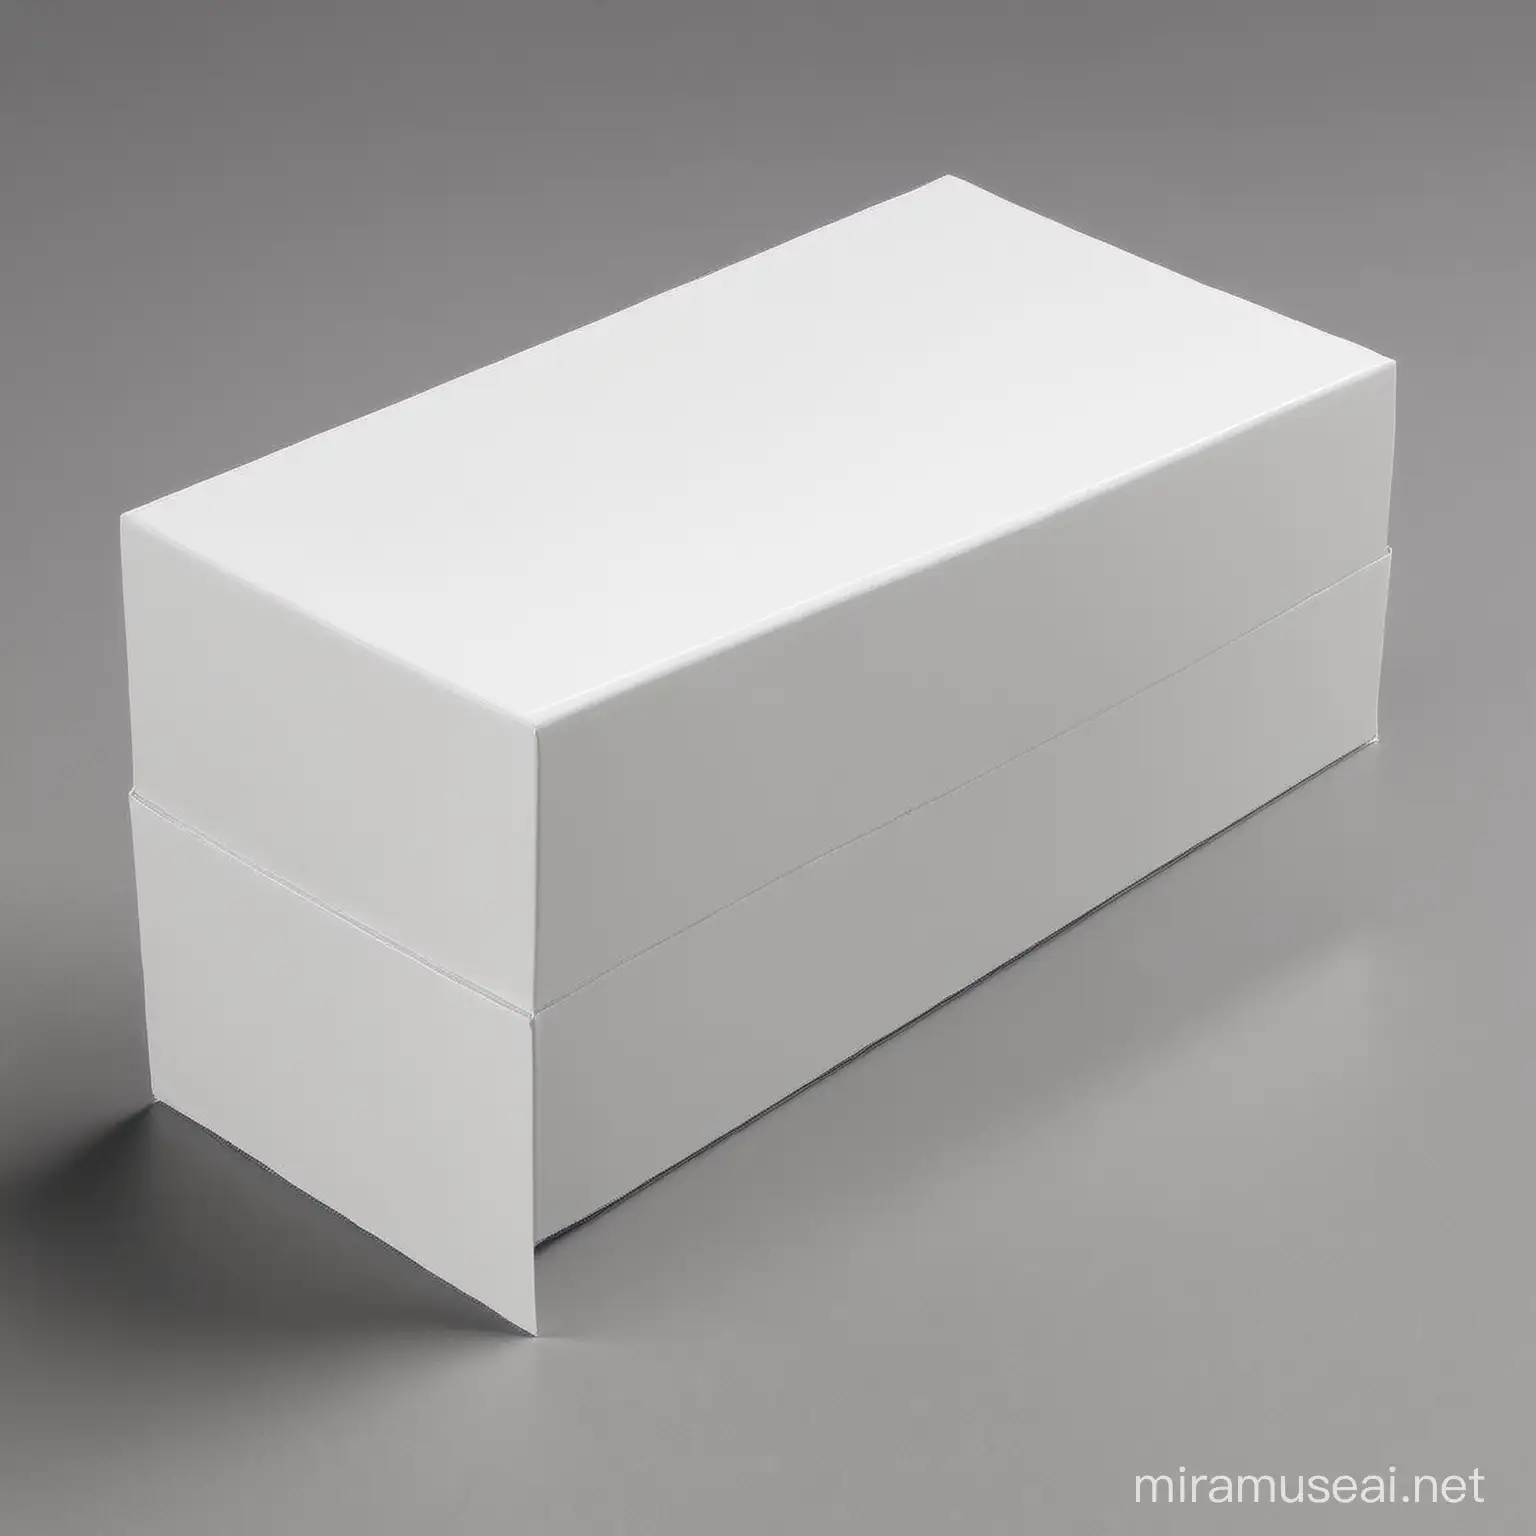 Minimalist White Box Background